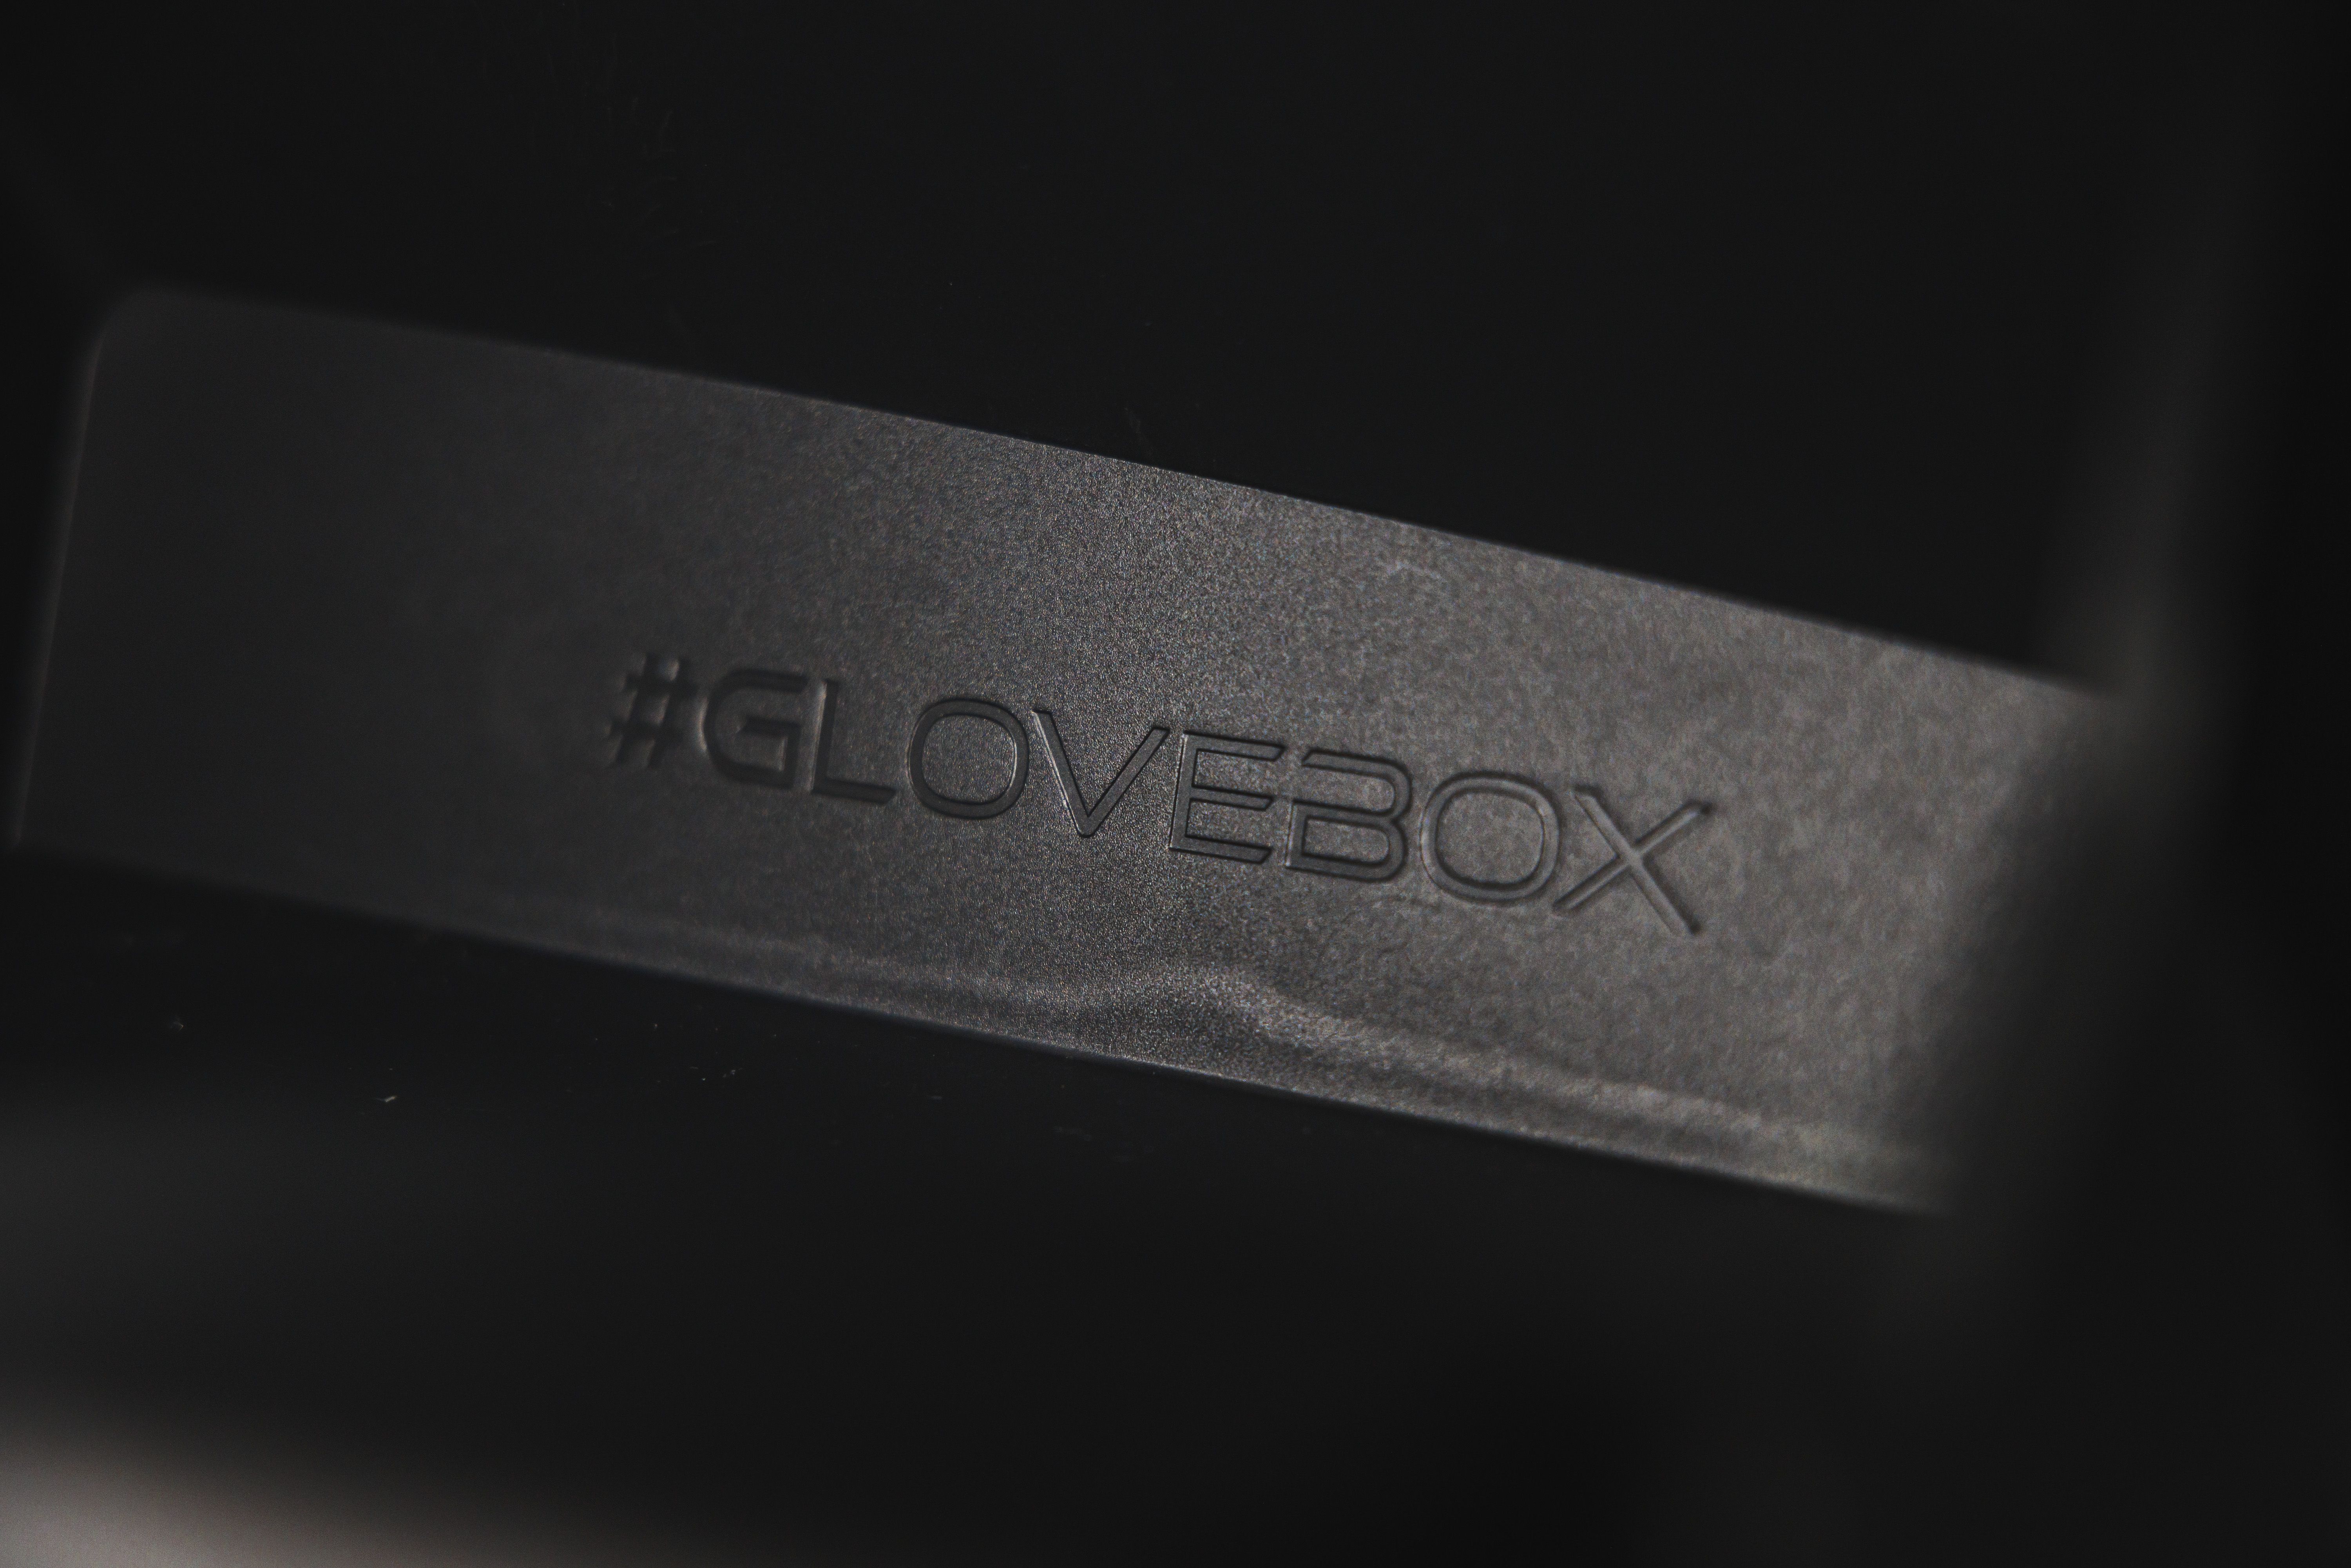 #Glovebox